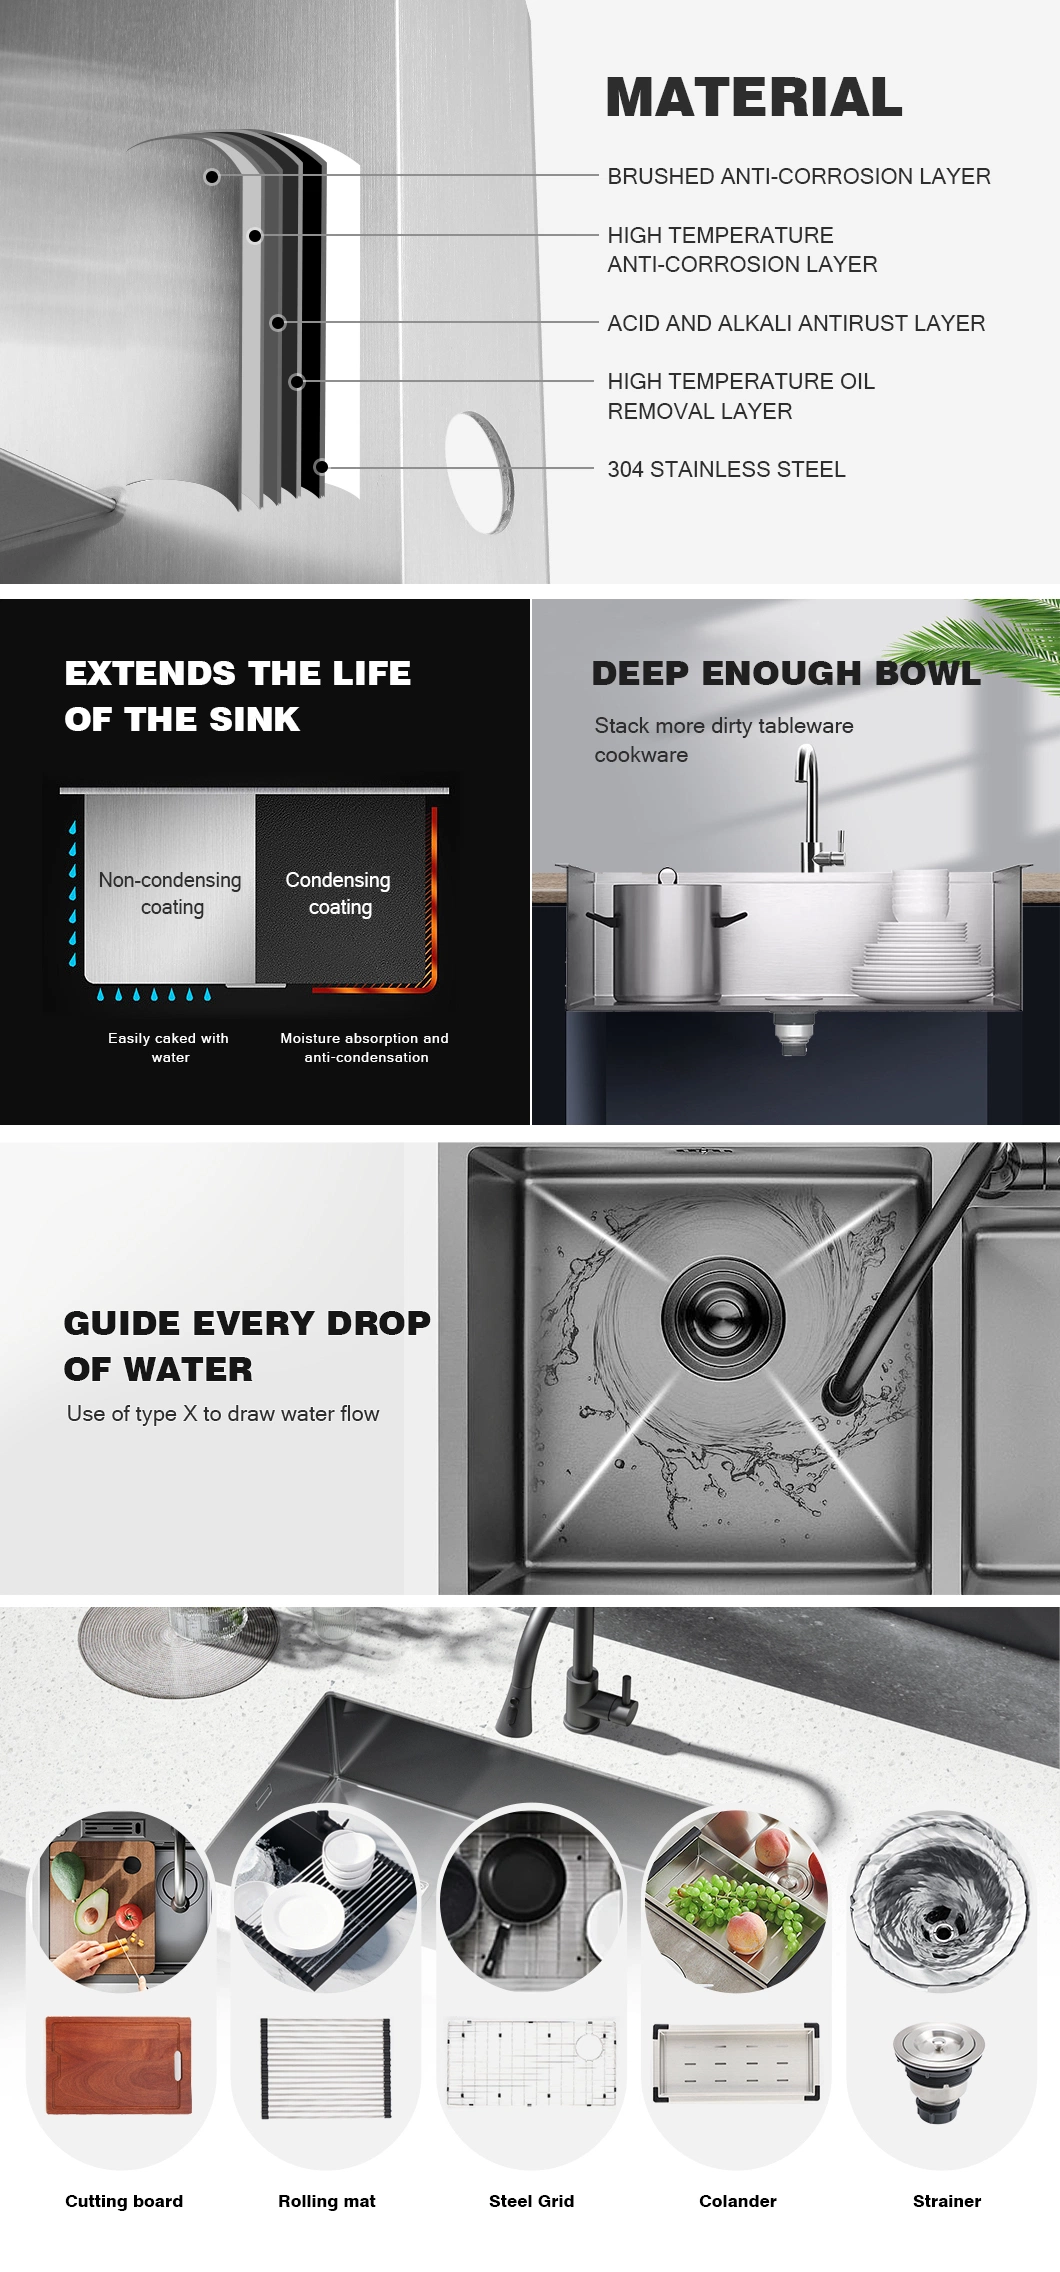 Home Hotel Brand New Design Modern Luxury Stainless Steel Double Bowl Drainboard Wash Basin Kitchen Sink